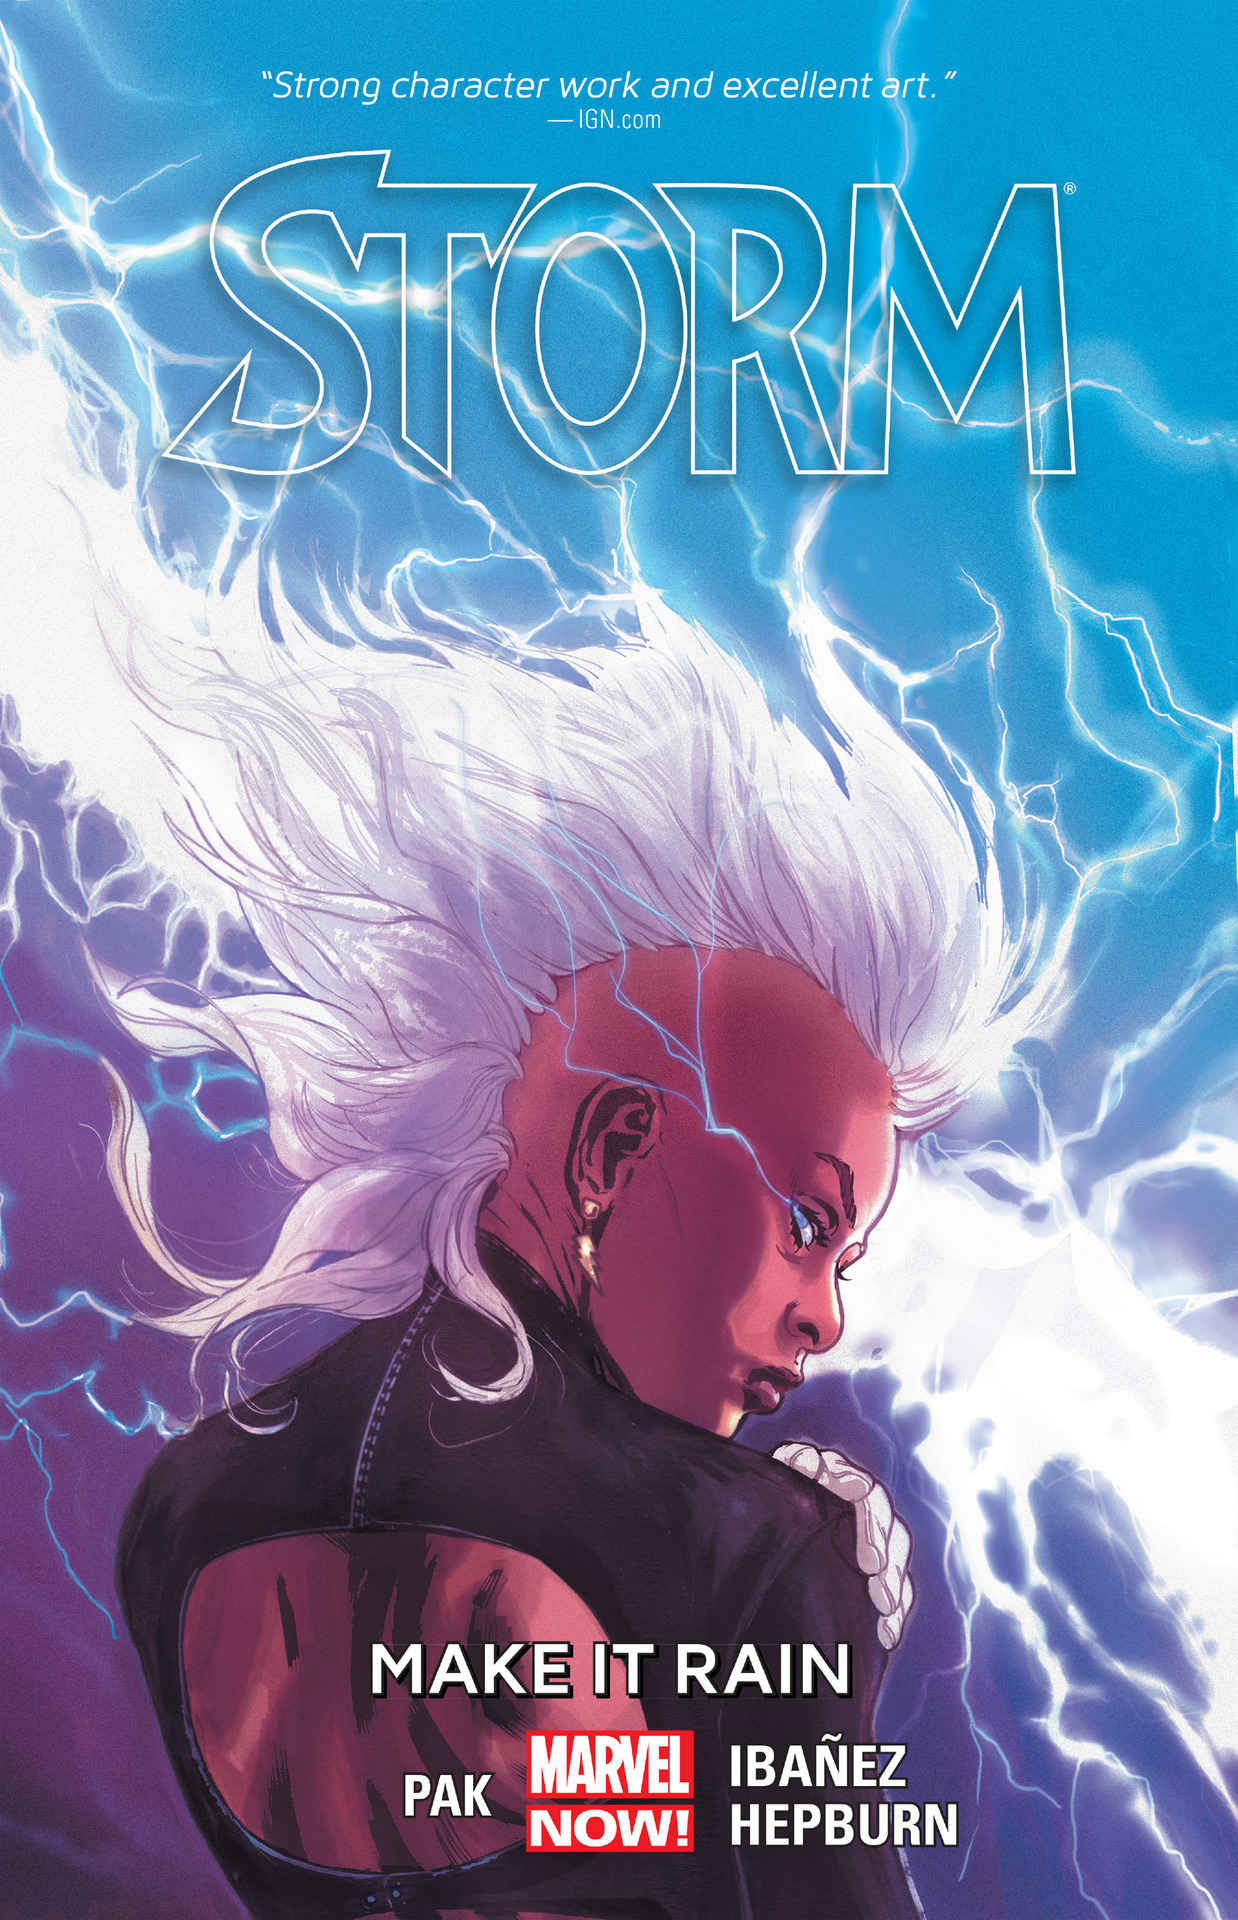 Storm vol 1 written by Greg Pak